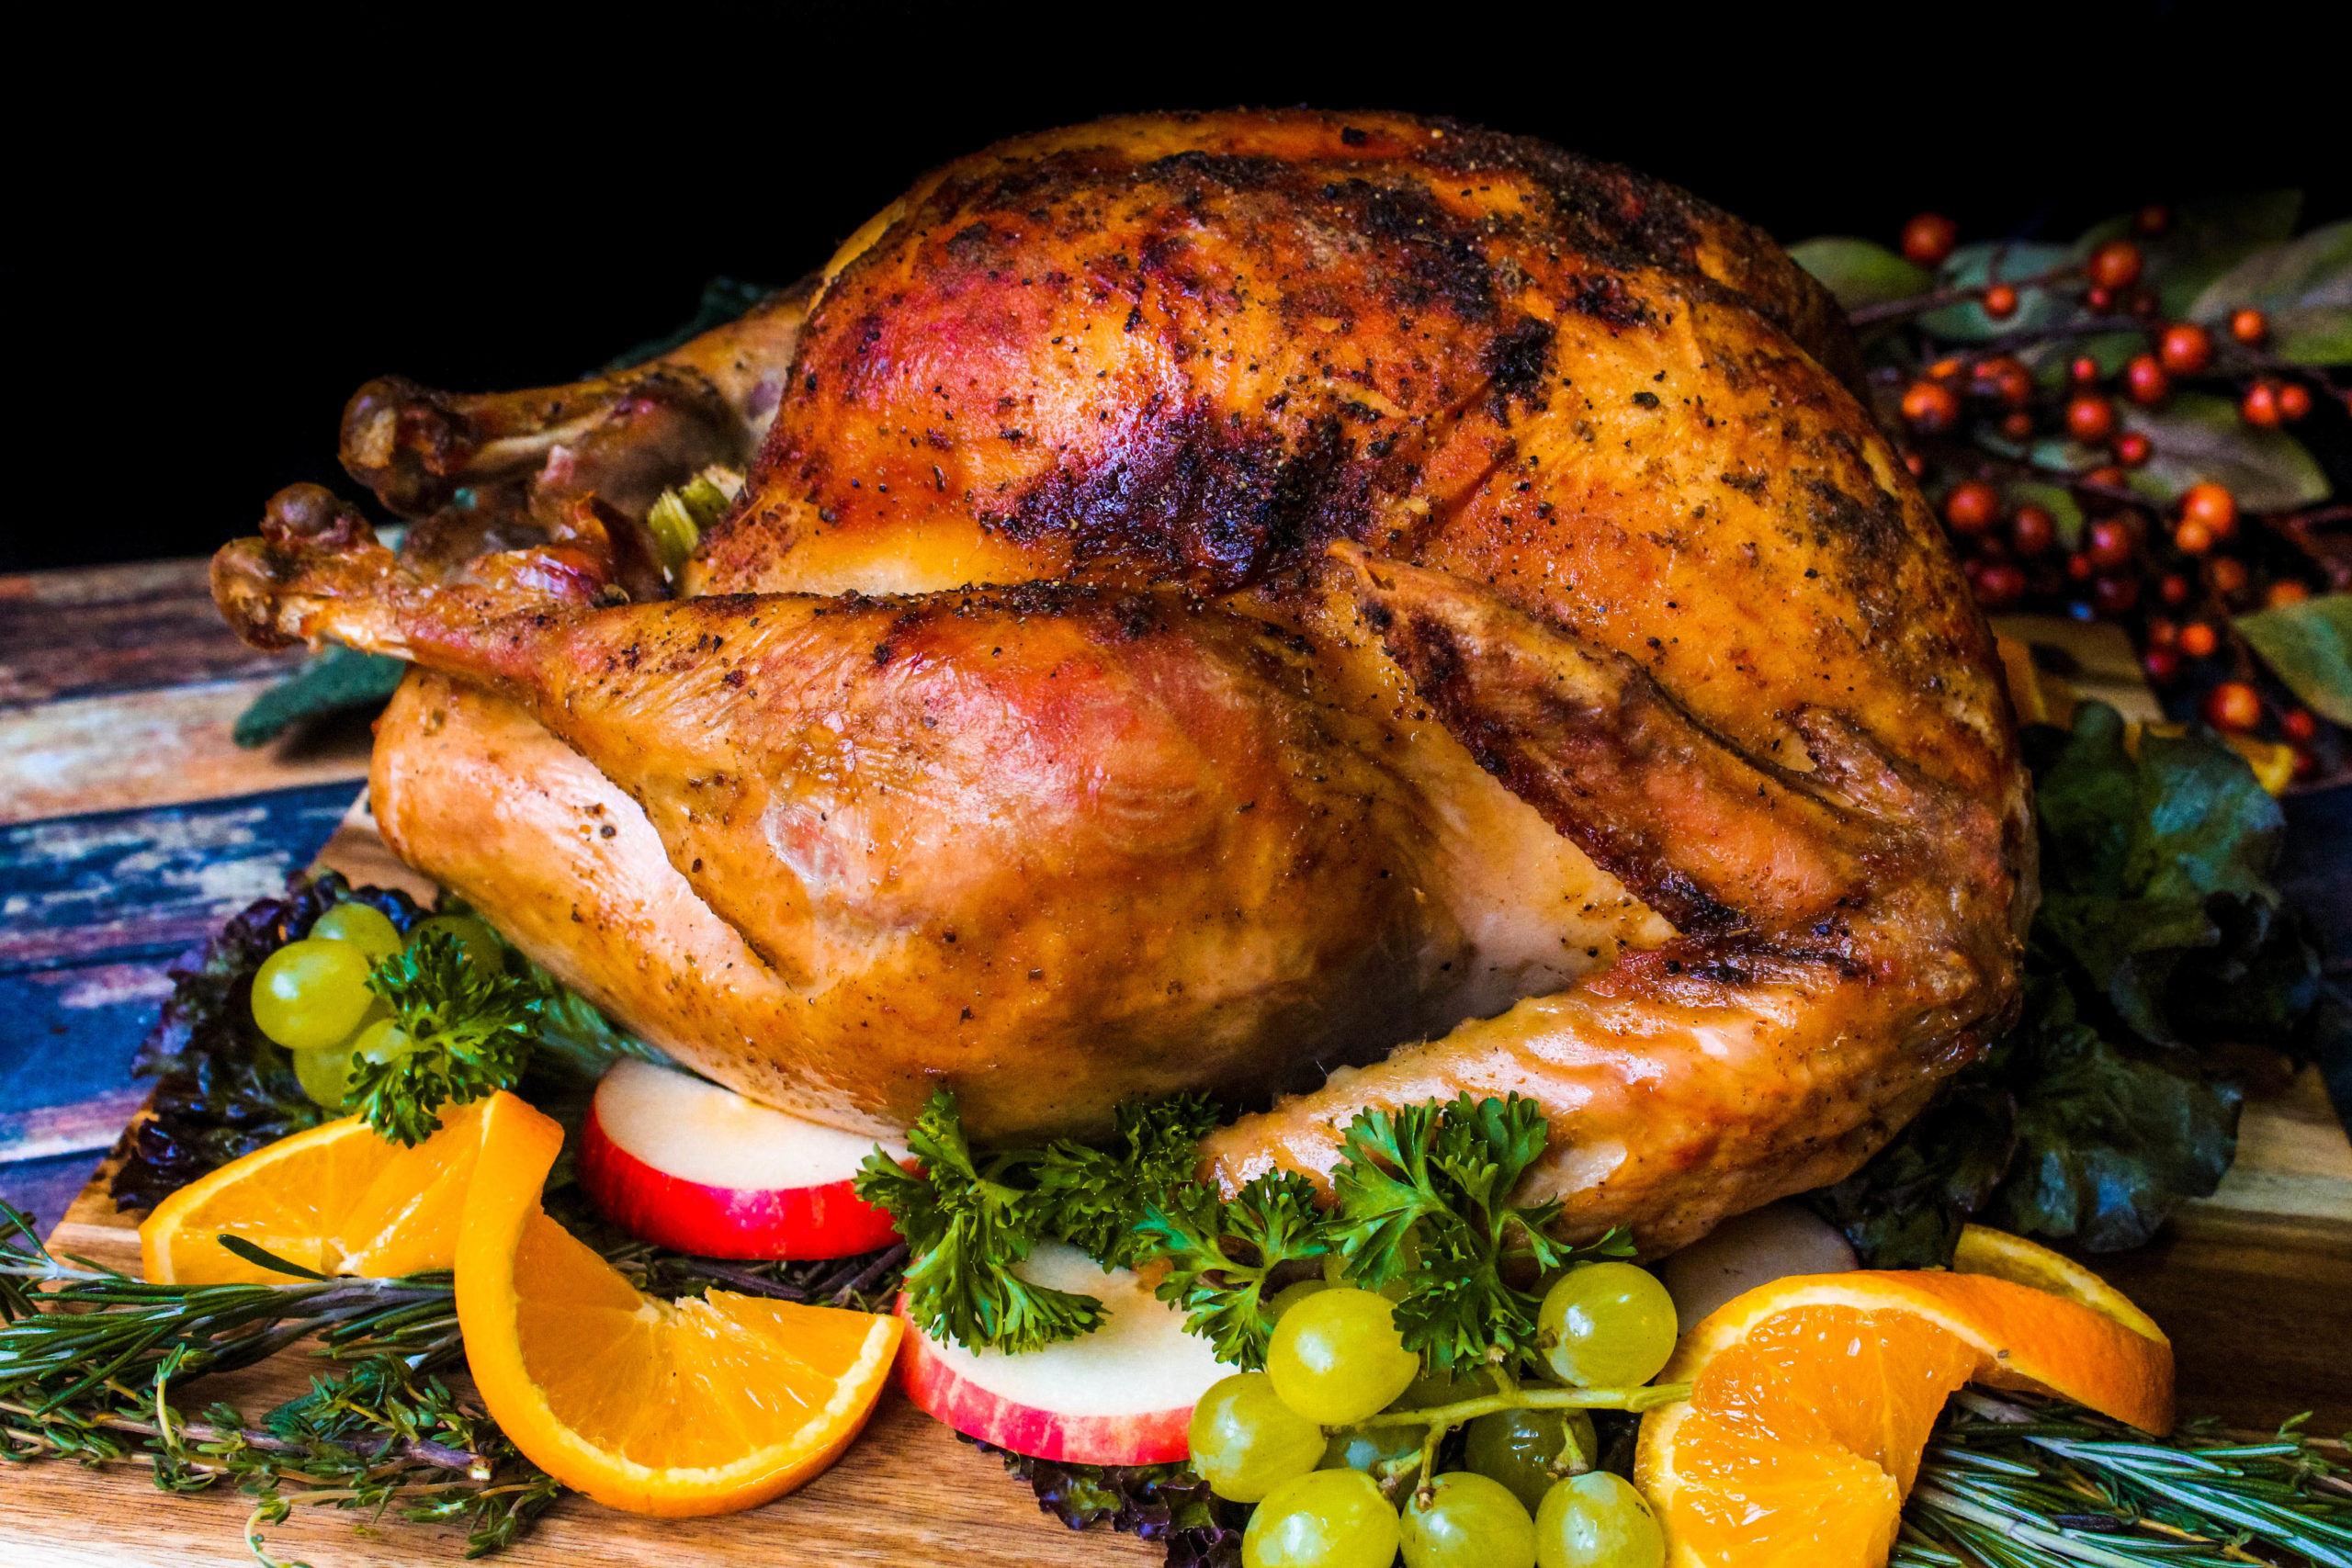 Roast turkey for easy Thanksgiving dinner menu